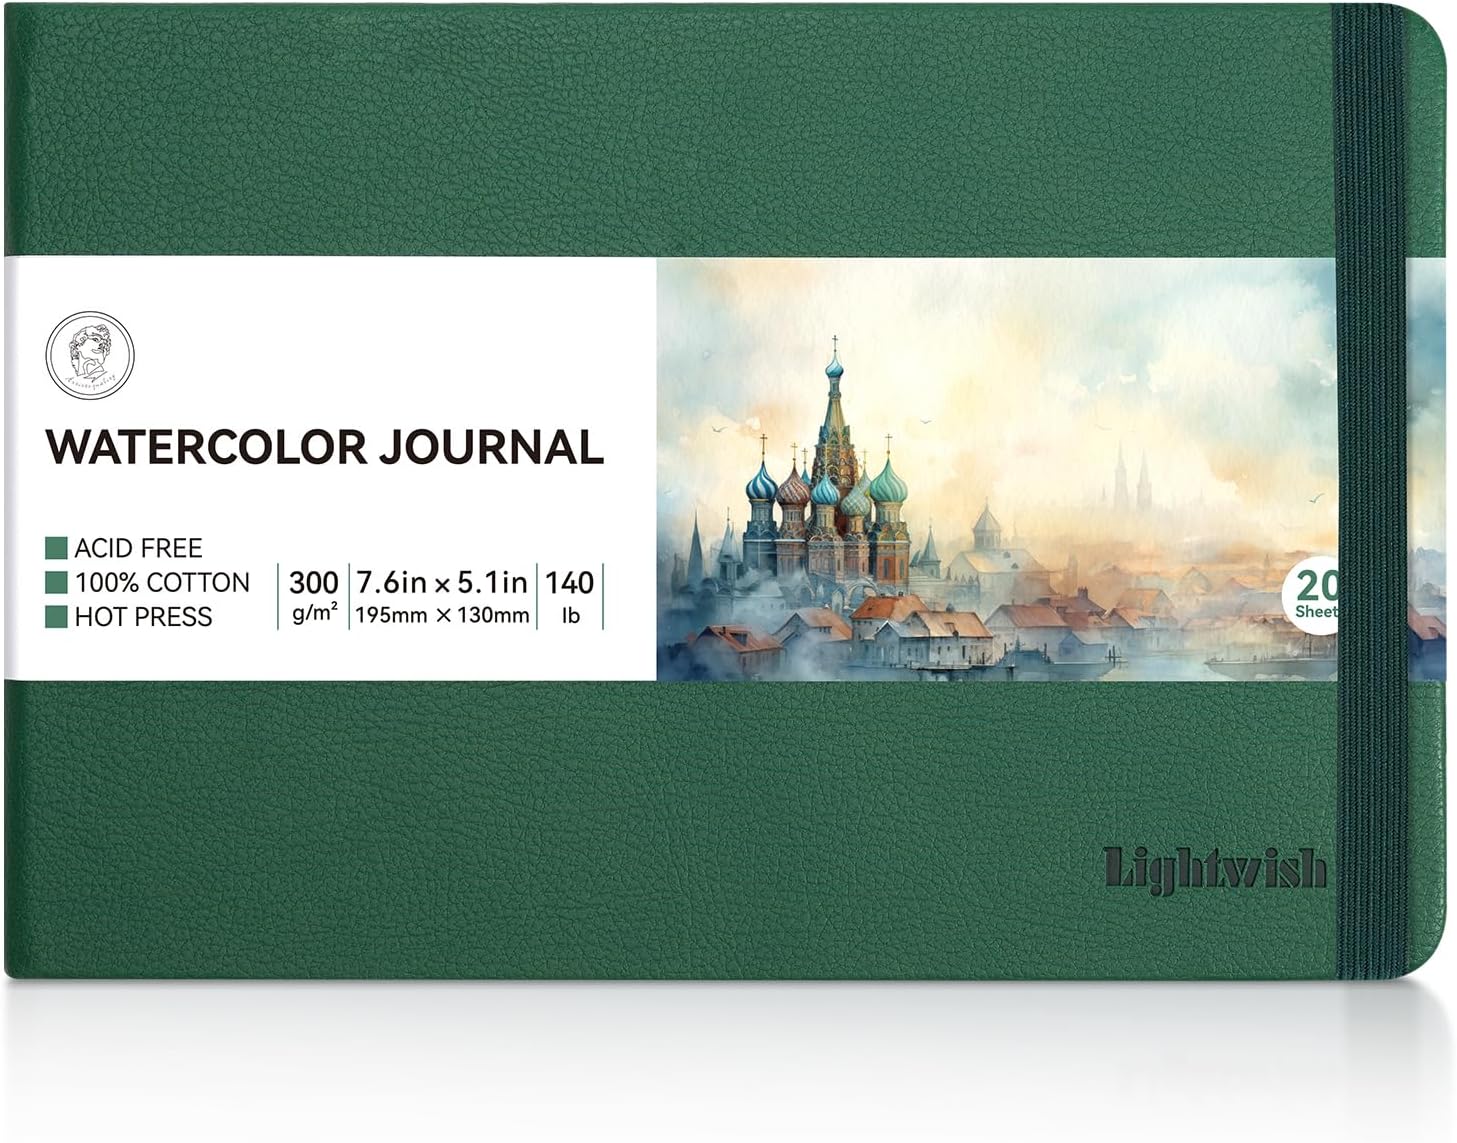 Lightwish Watercolor Journal, 100% Cotton Hot Press Art Supplies Watercolor Paper7.6” x 5.1”, 20 Sheets (140lb/300gsm)